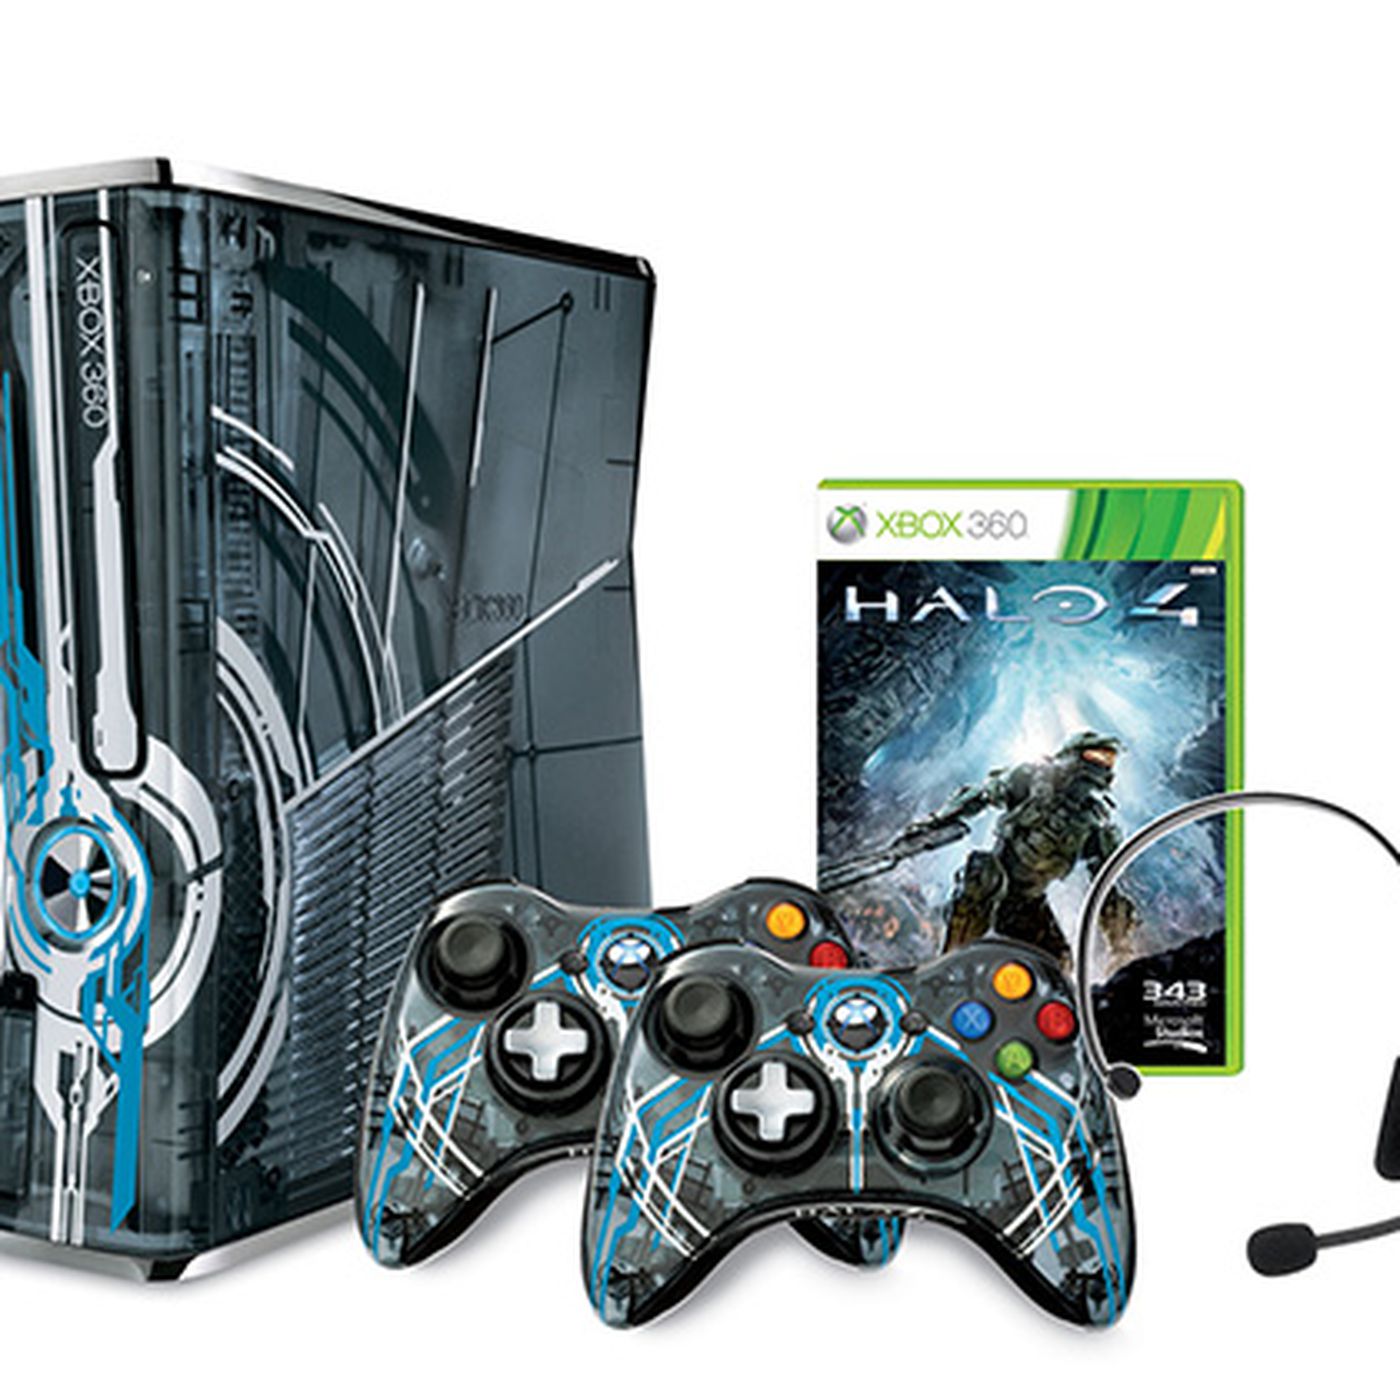 constante Kaarsen kasteel Halo 4' Limited Edition Xbox 360 bundle hits Nov. 6th for $399.99 - Polygon